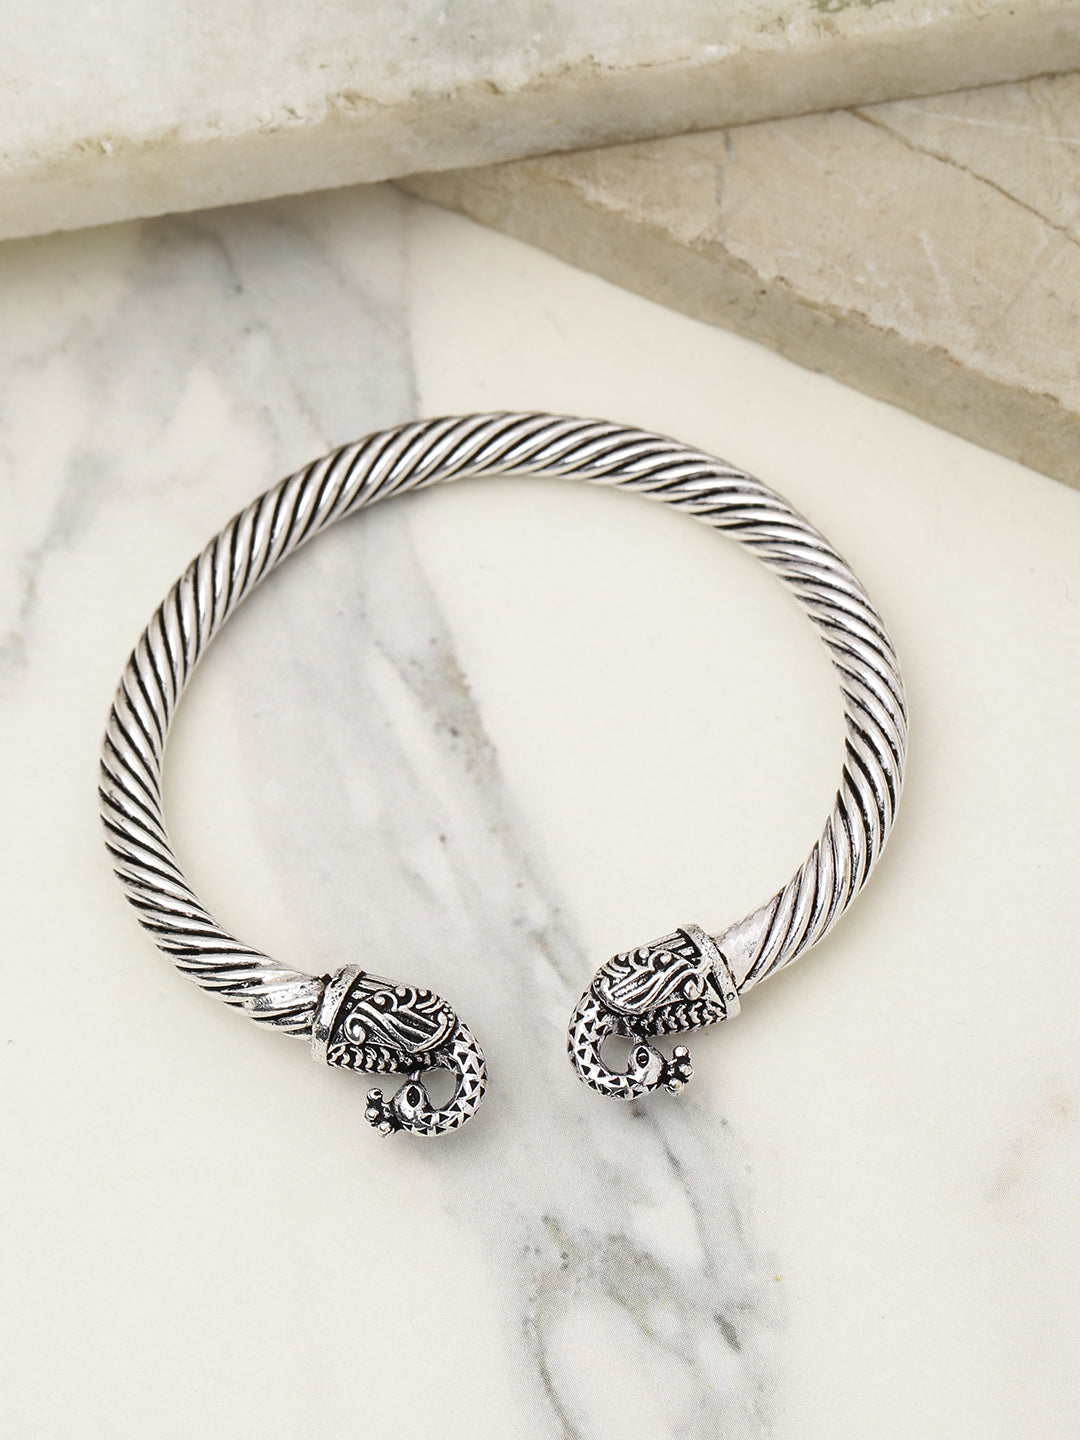 Oxidised Silver Peacock Inspired Twisted Rope Design Kada Bracelet